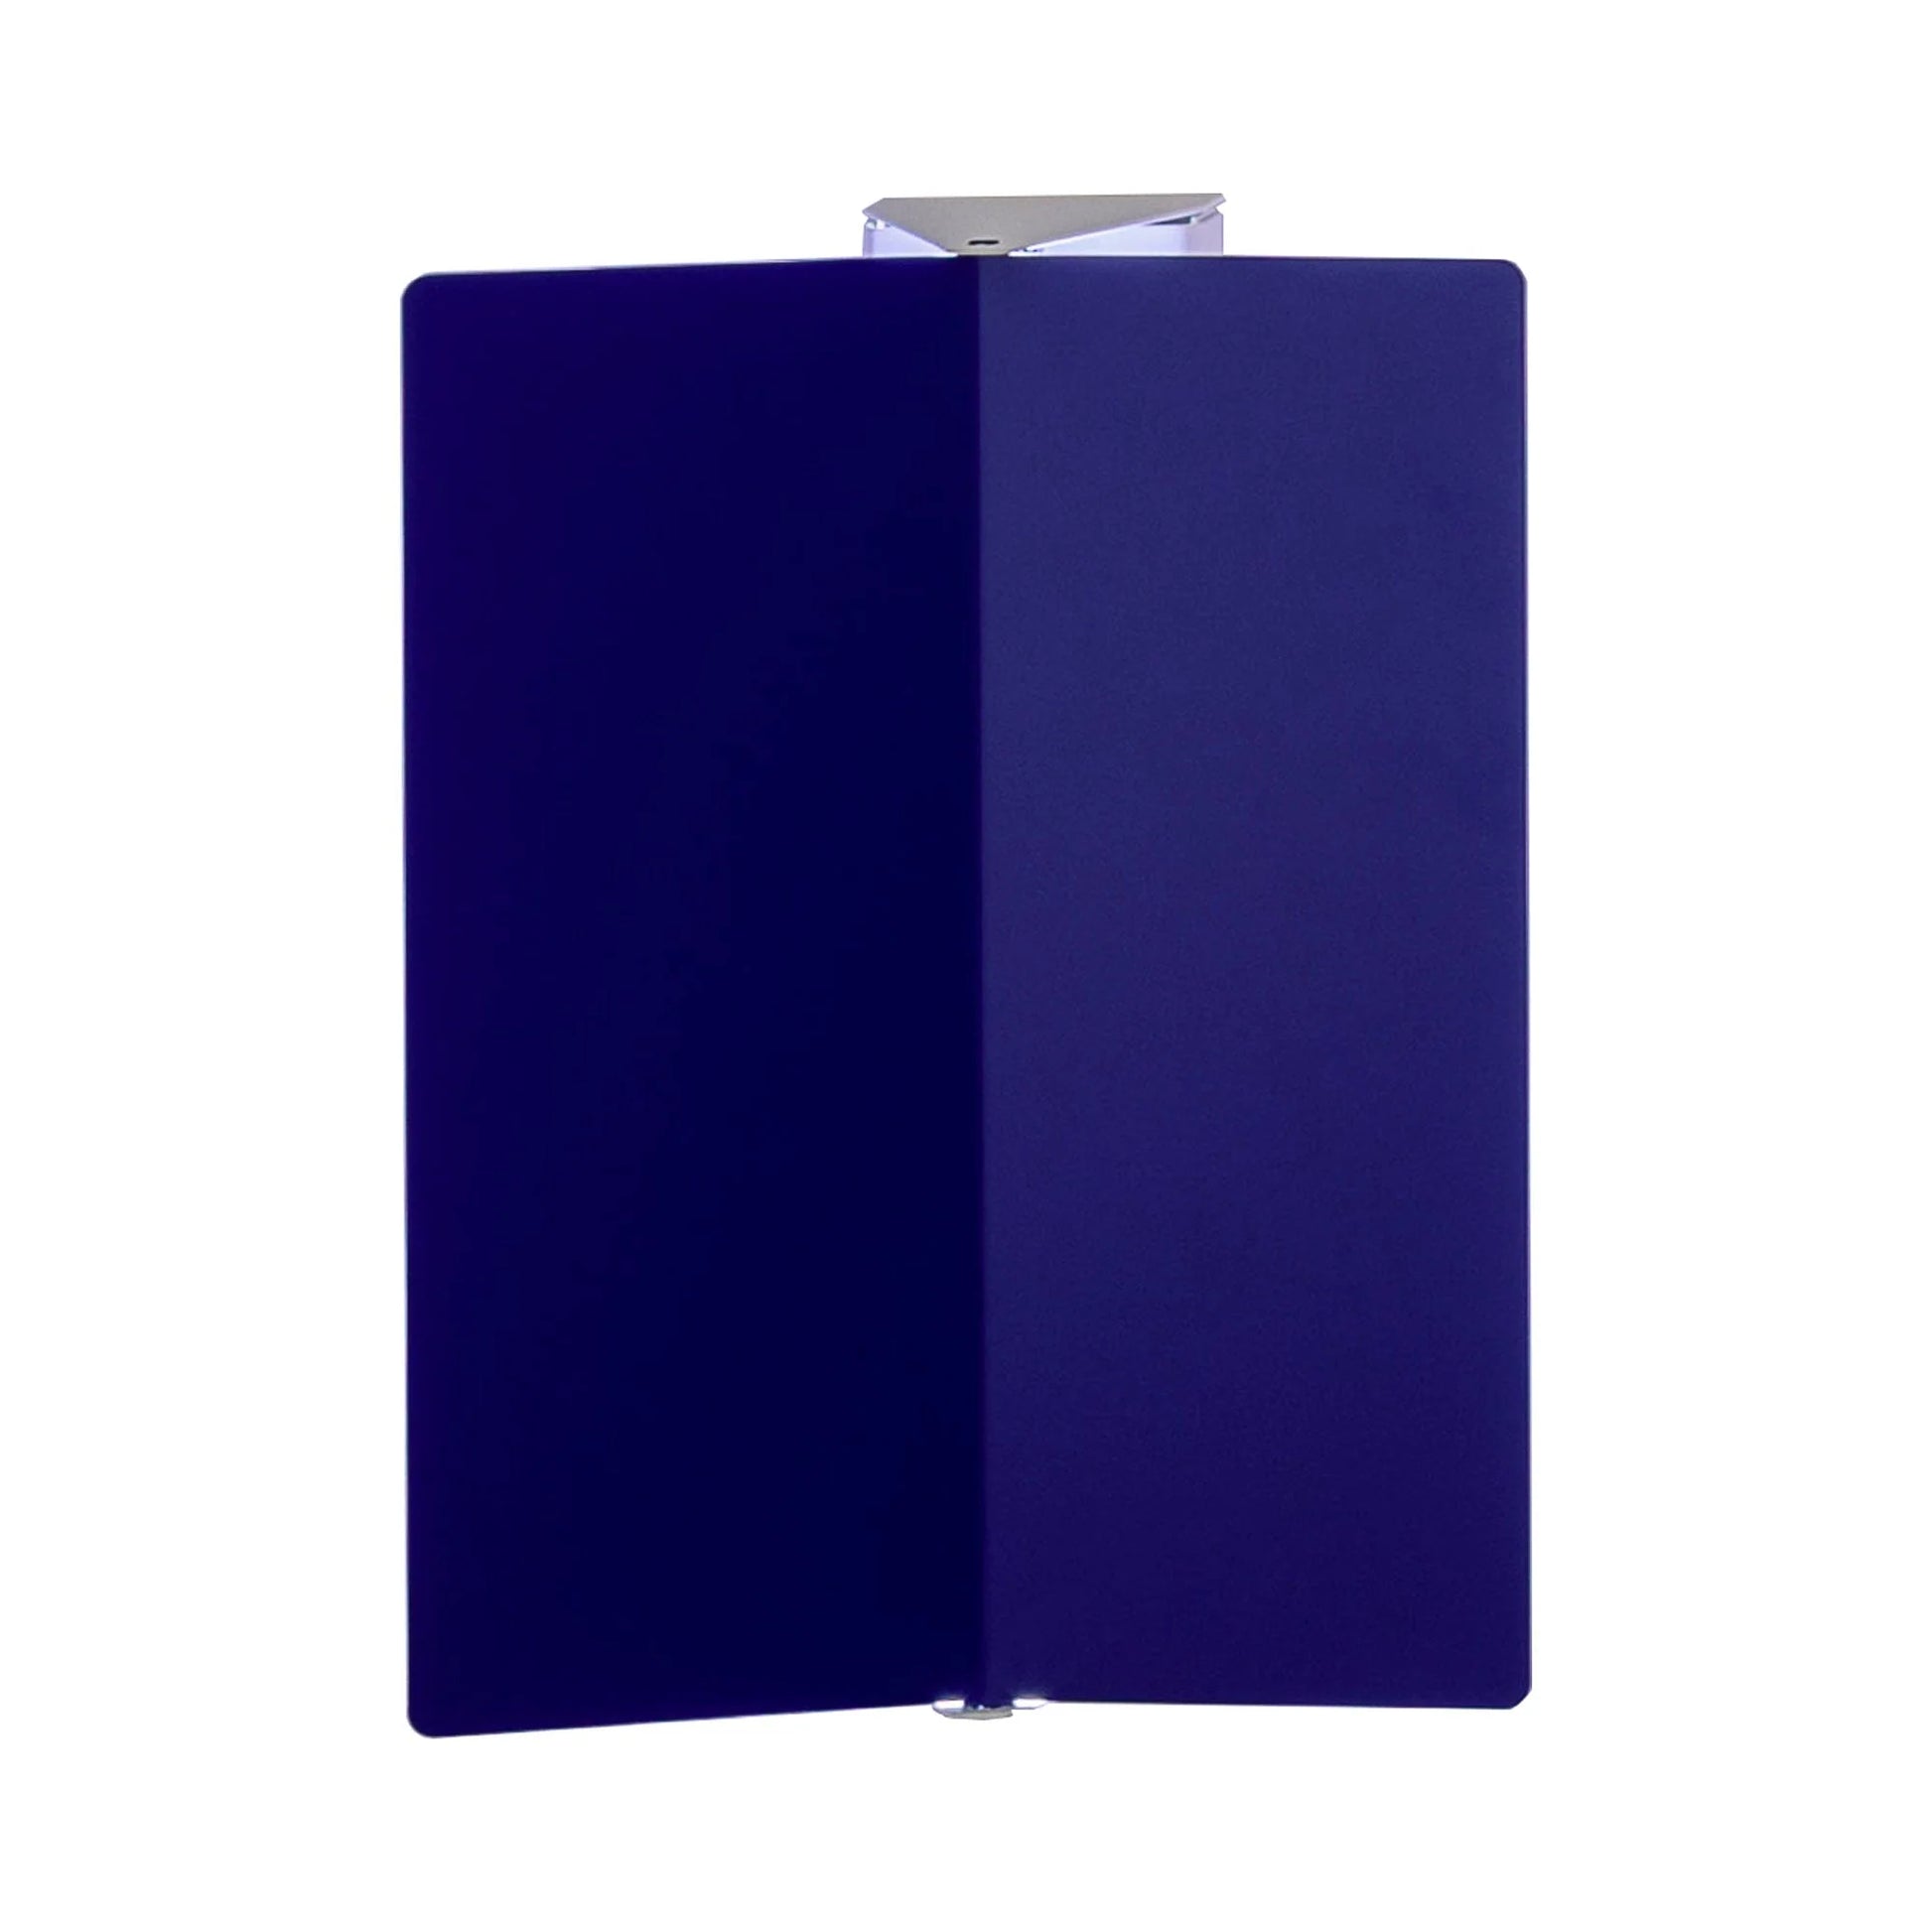 Blue painted aluminium adjustable  pivotable wall lamp by Nemo